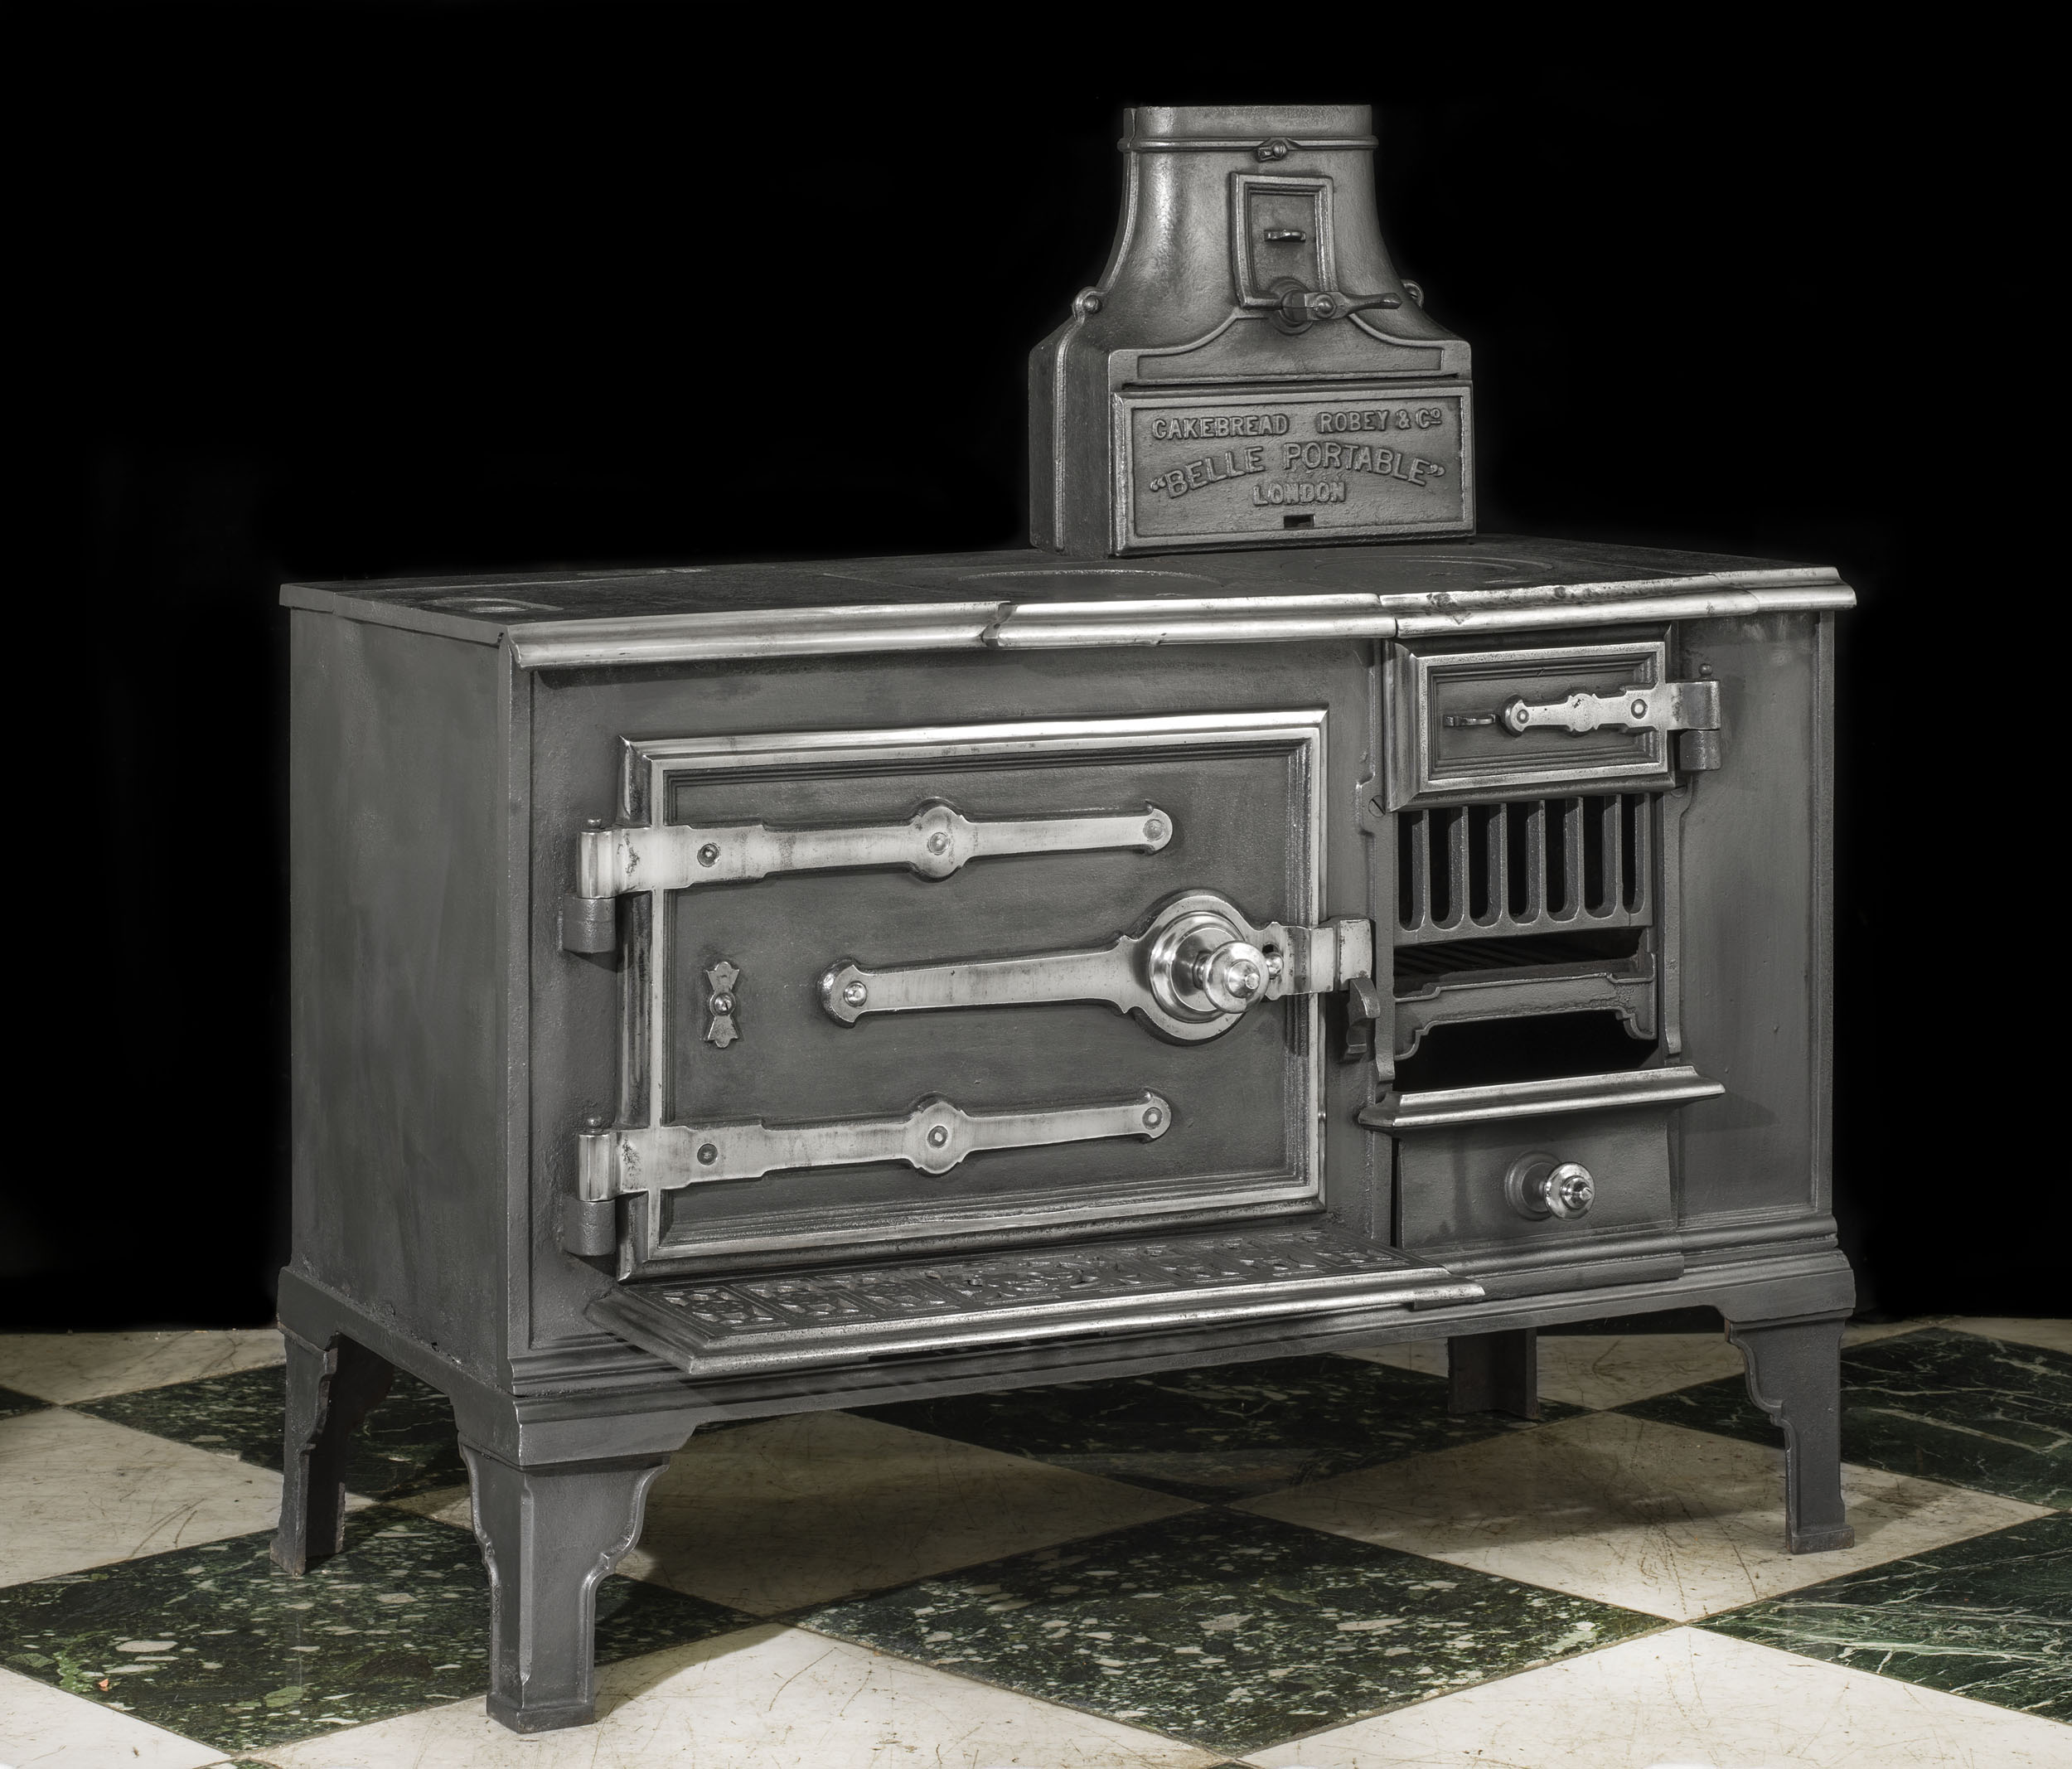 A Portable Victorian Cast Iron Kitchen Range